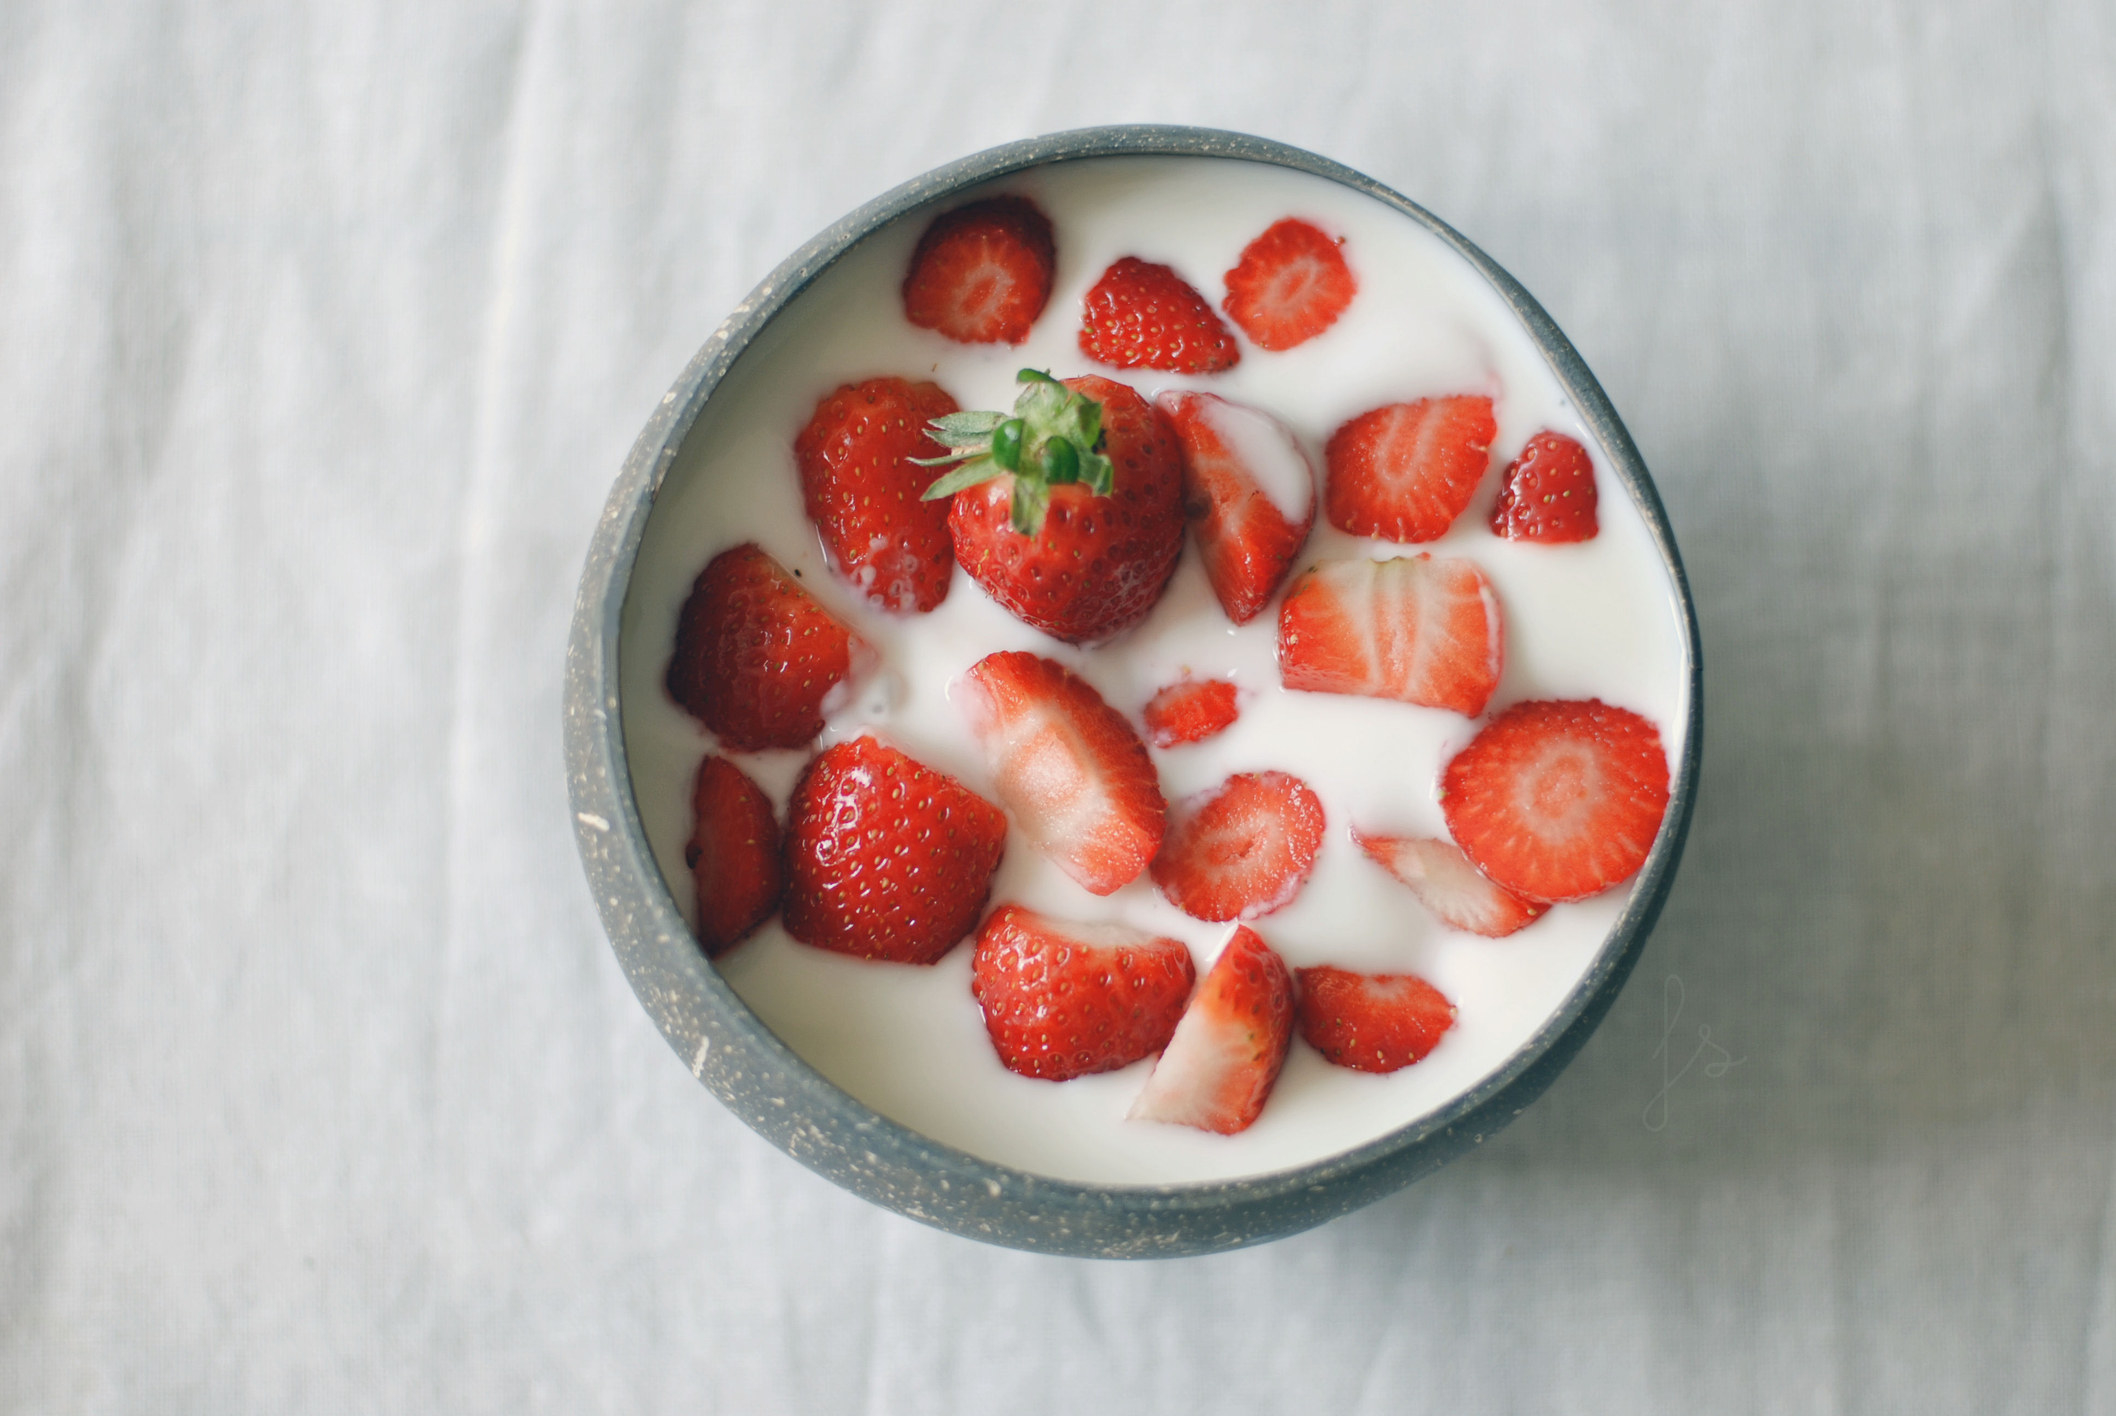 Strawberries in a bowl of yogurt